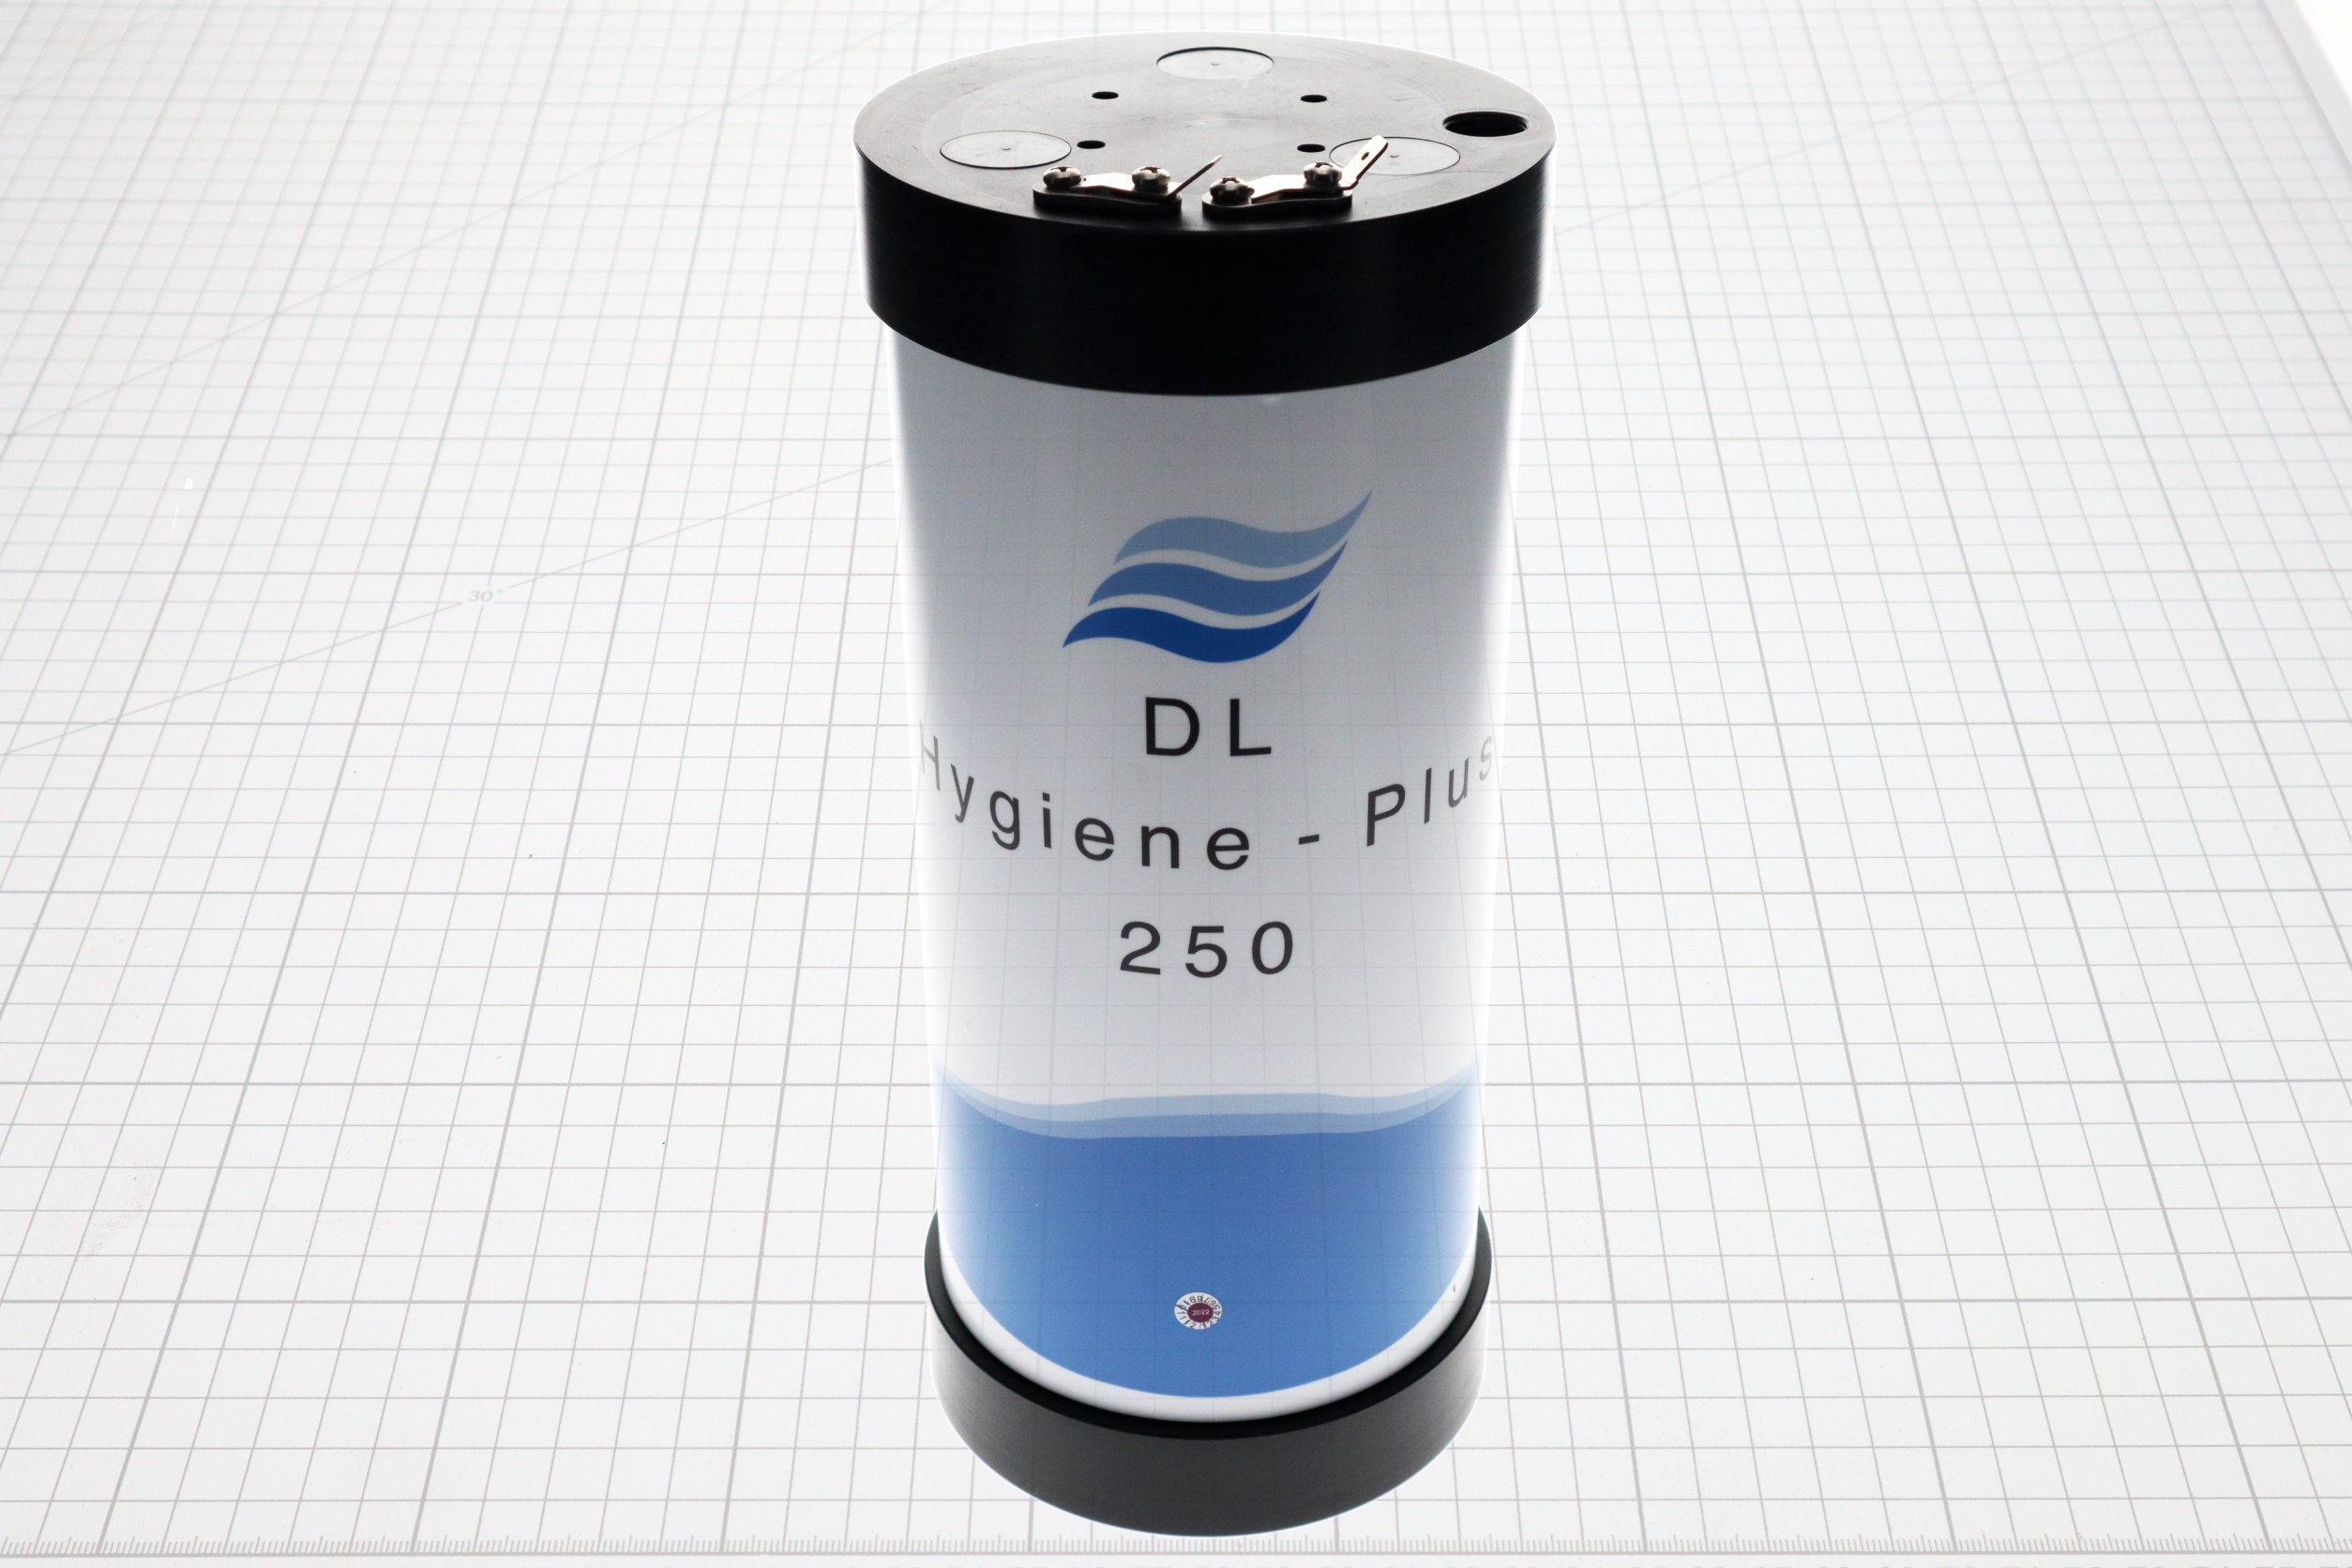 Dual/dl silver ionization type 250